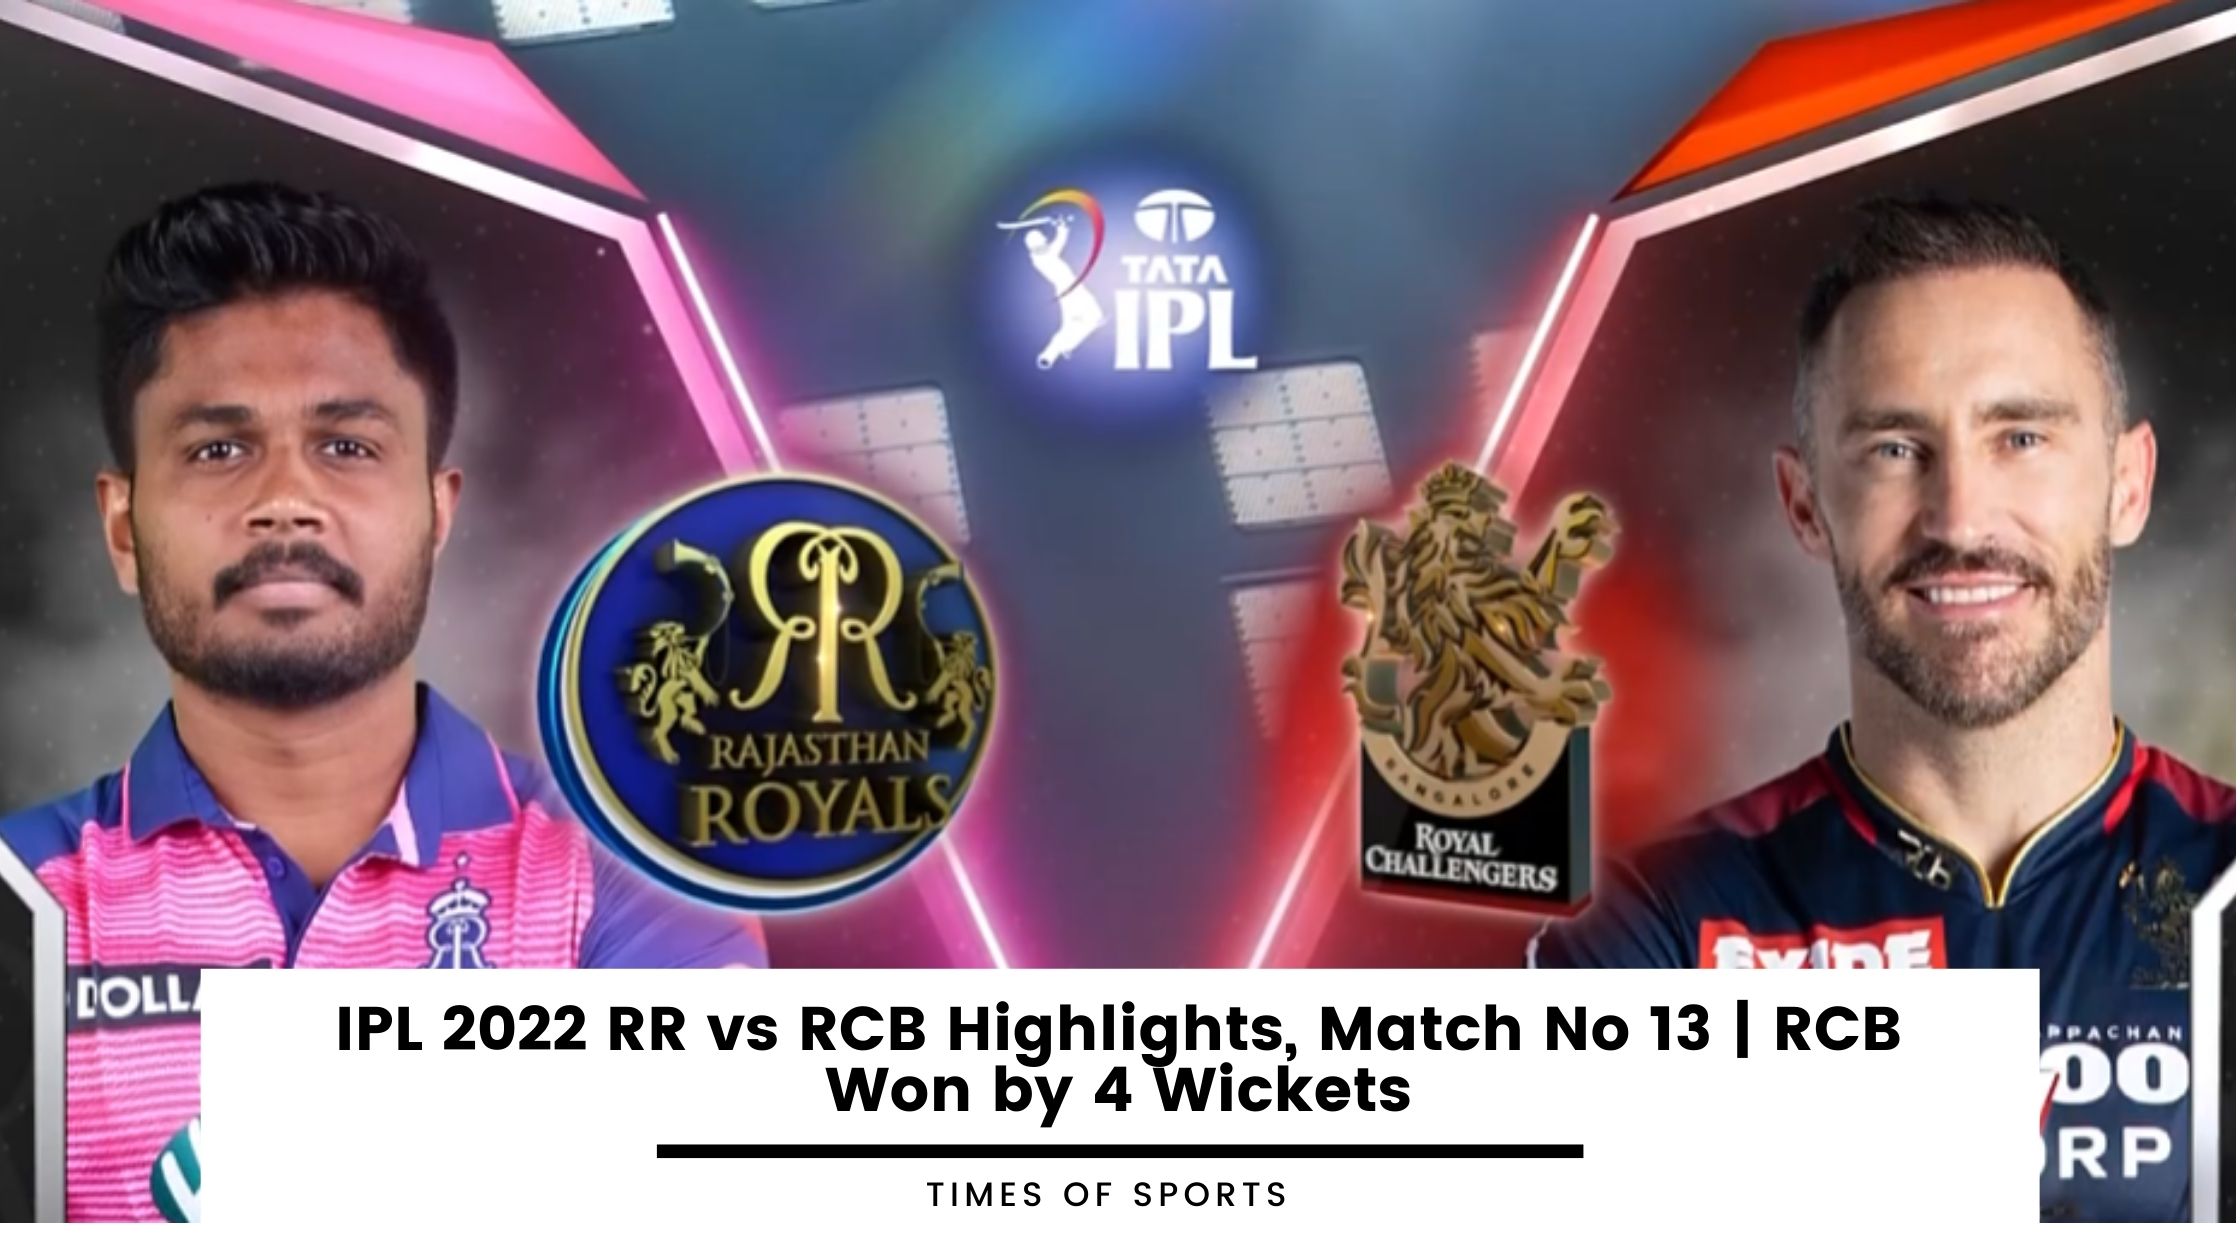 IPL 2022 RR vs RCB Highlights, Match No 13 RCB Won by 4 Wickets